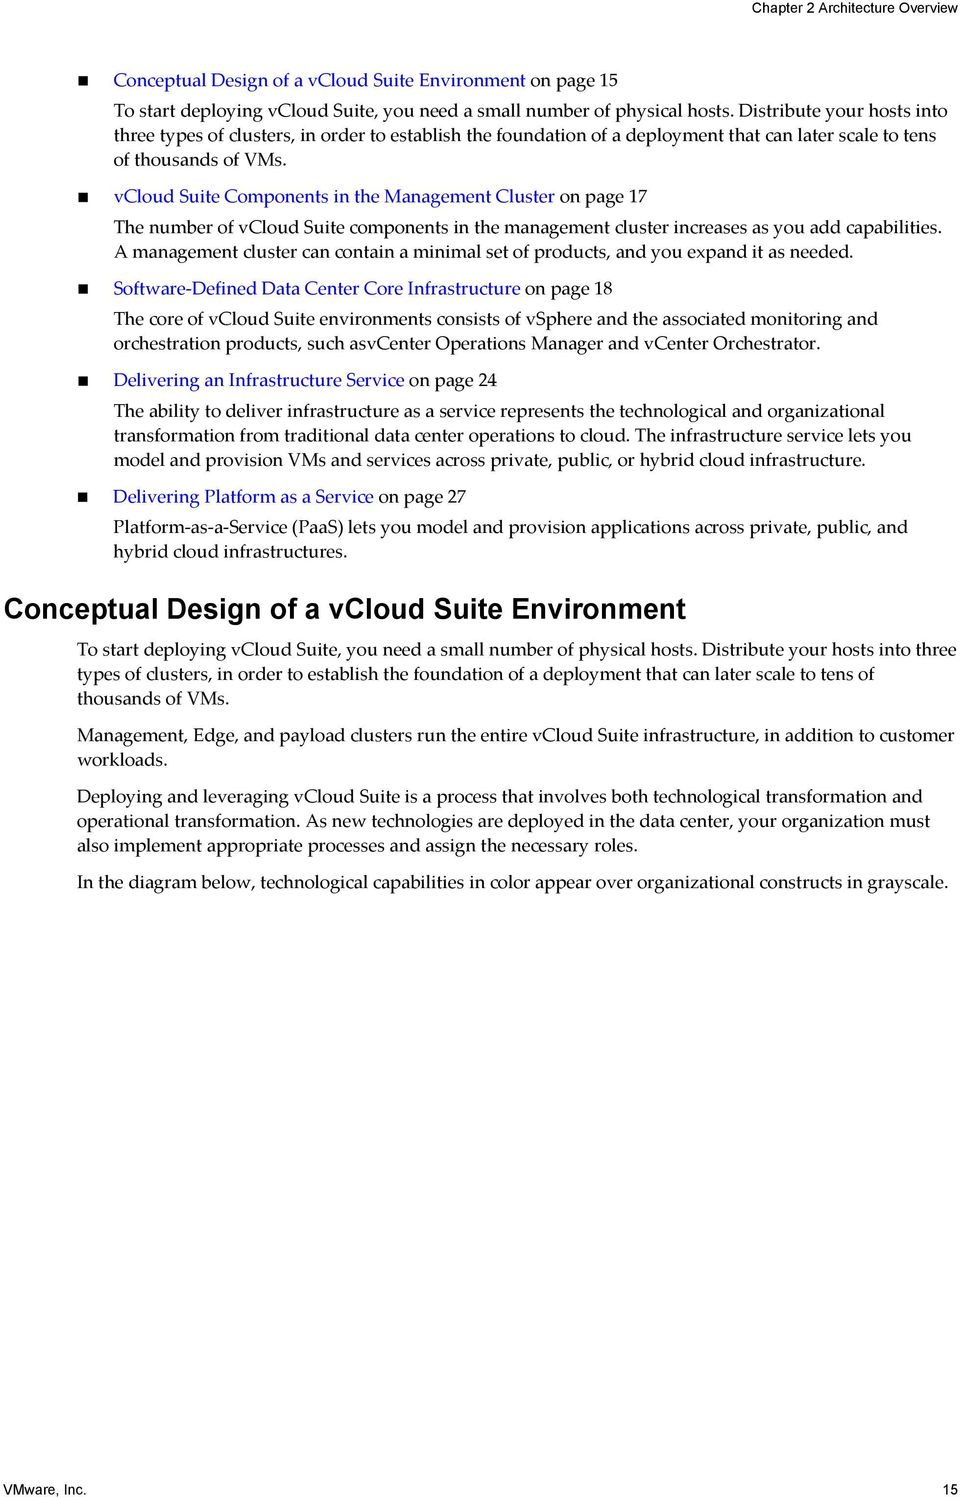 vcloud Suite Components in the Management Cluster on page 17 The number of vcloud Suite components in the management cluster increases as you add capabilities.